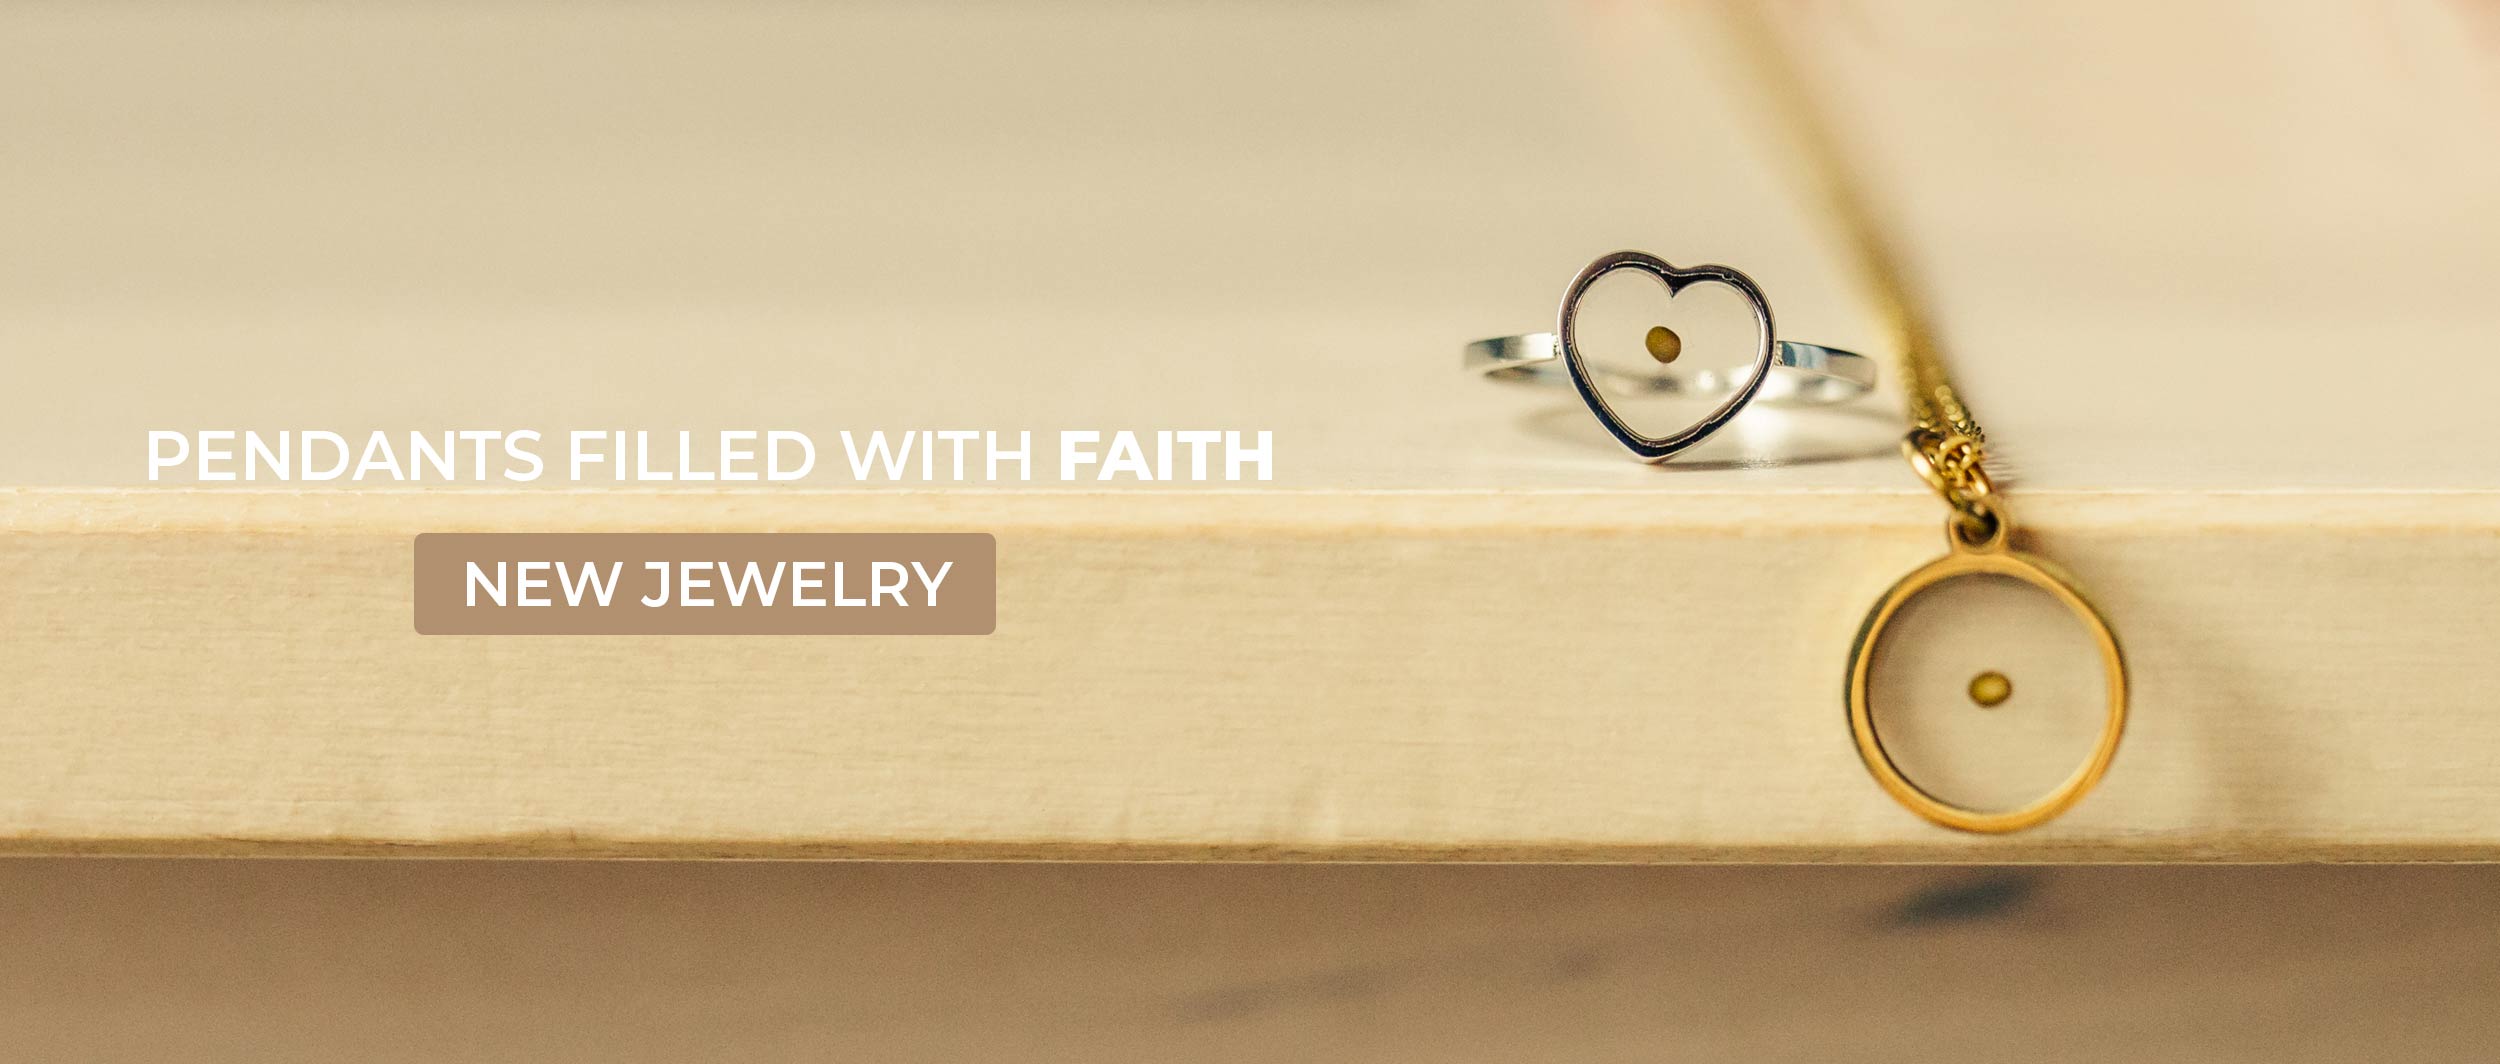 New Faith-Filled Pendants